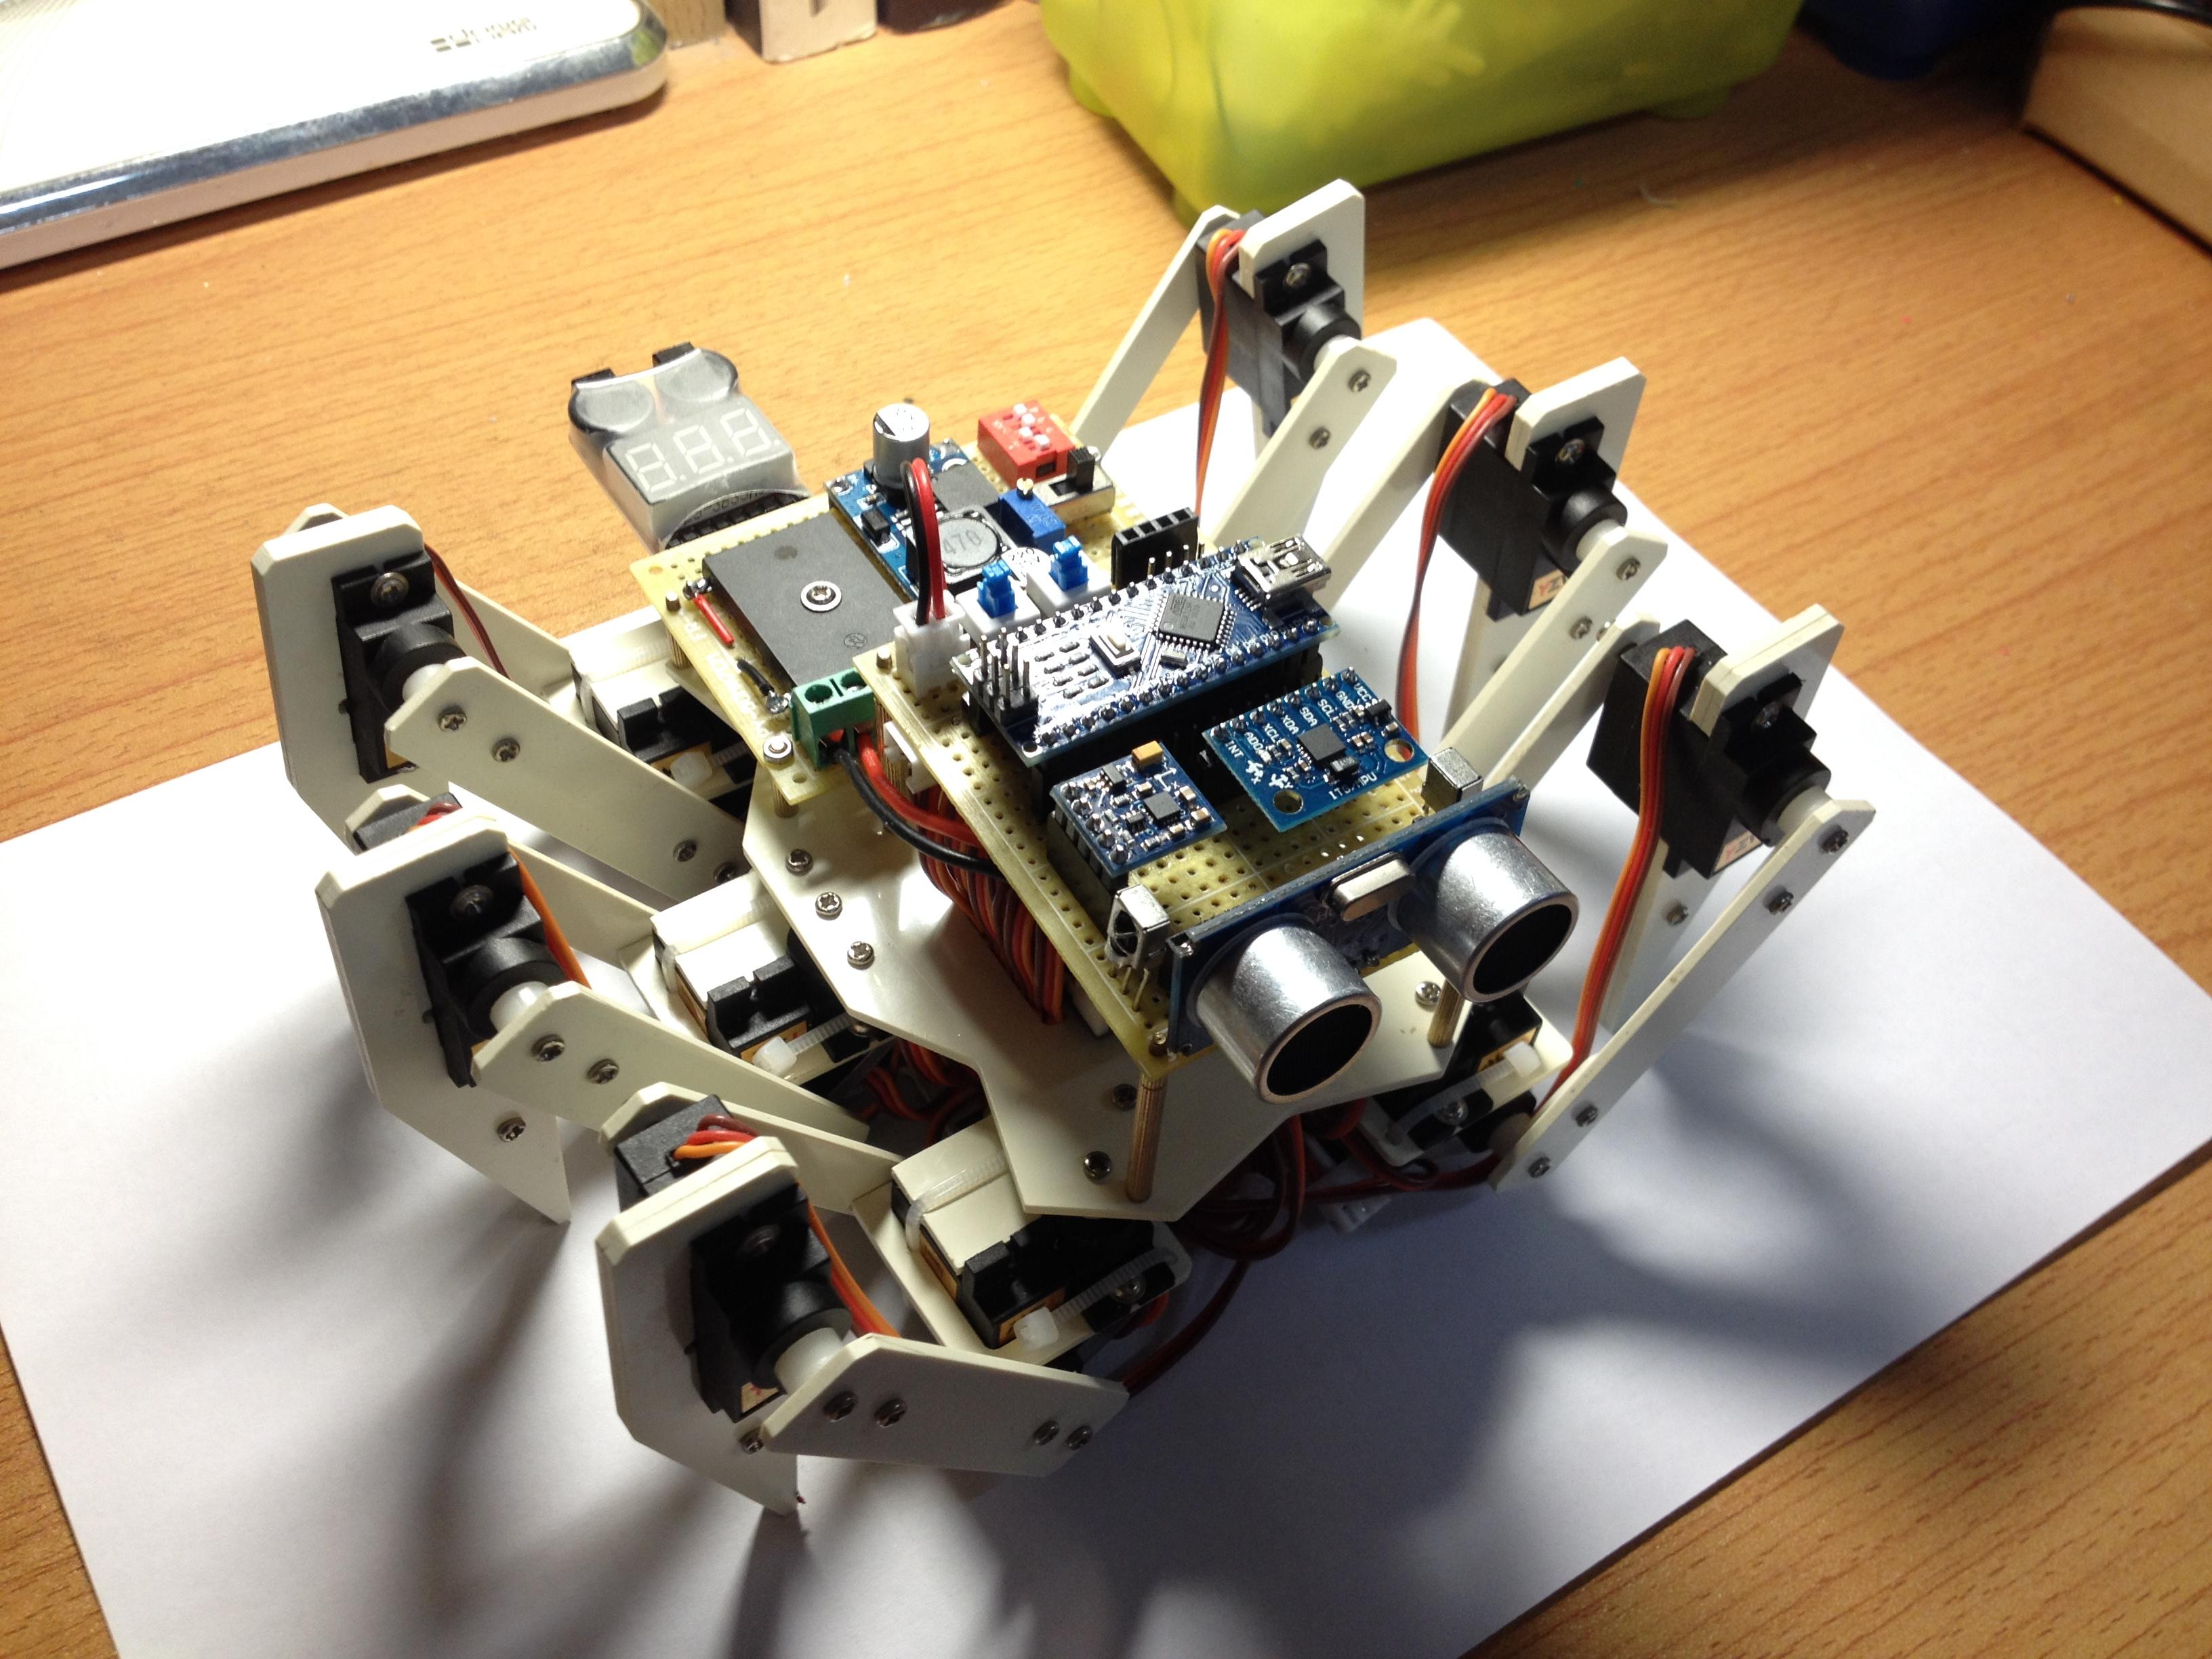 How to Make Box Robots: Kids’ Cardboard Box Craft Project | DK UK